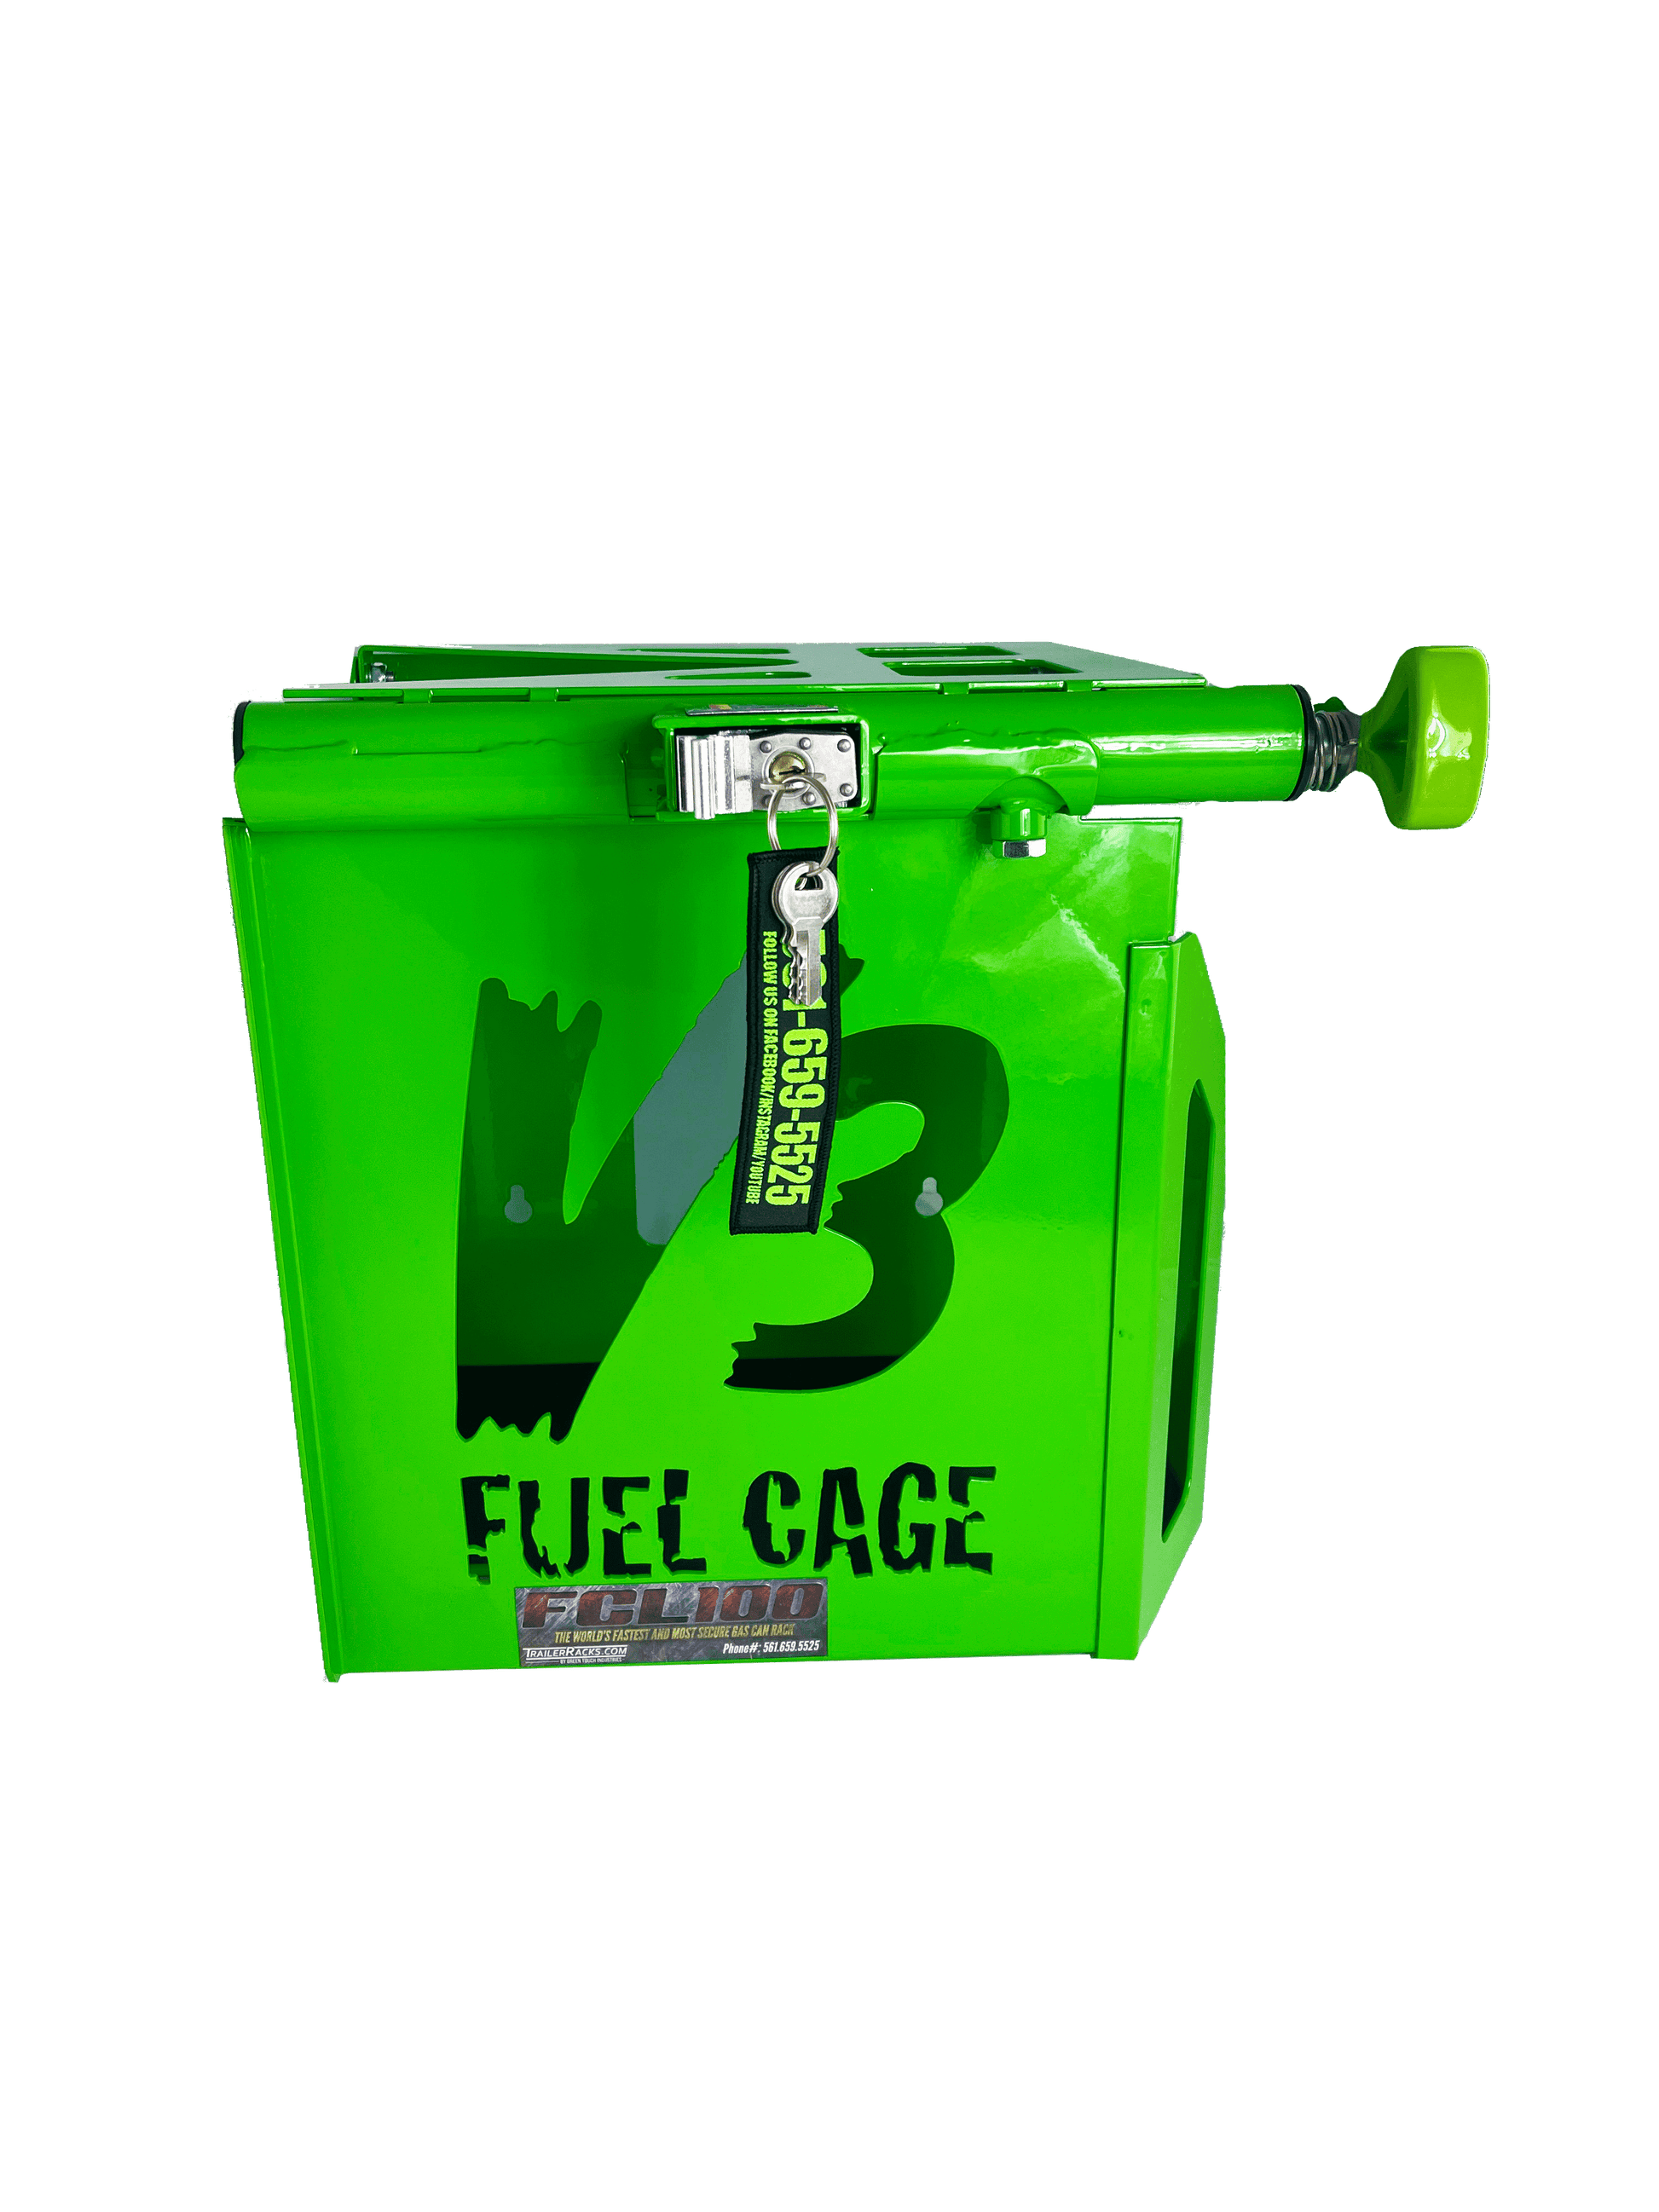 Fuel Cage | Xtreme Pro Series | FCL100 or FCS200 - TrailerRacks.com